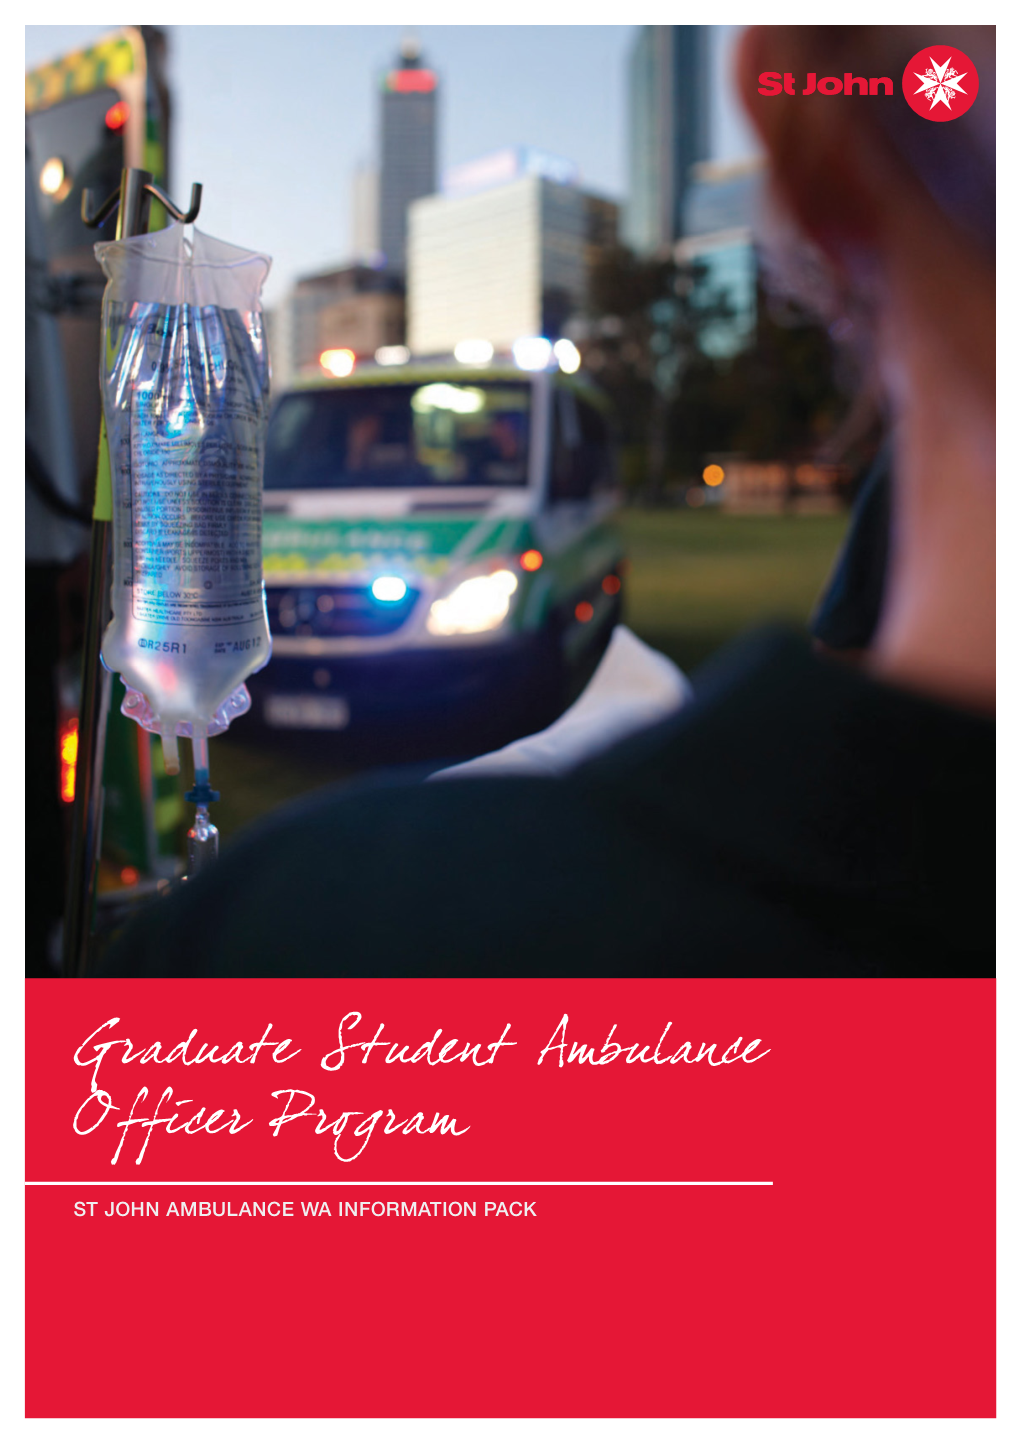 Graduate Student Ambulance Officer Program